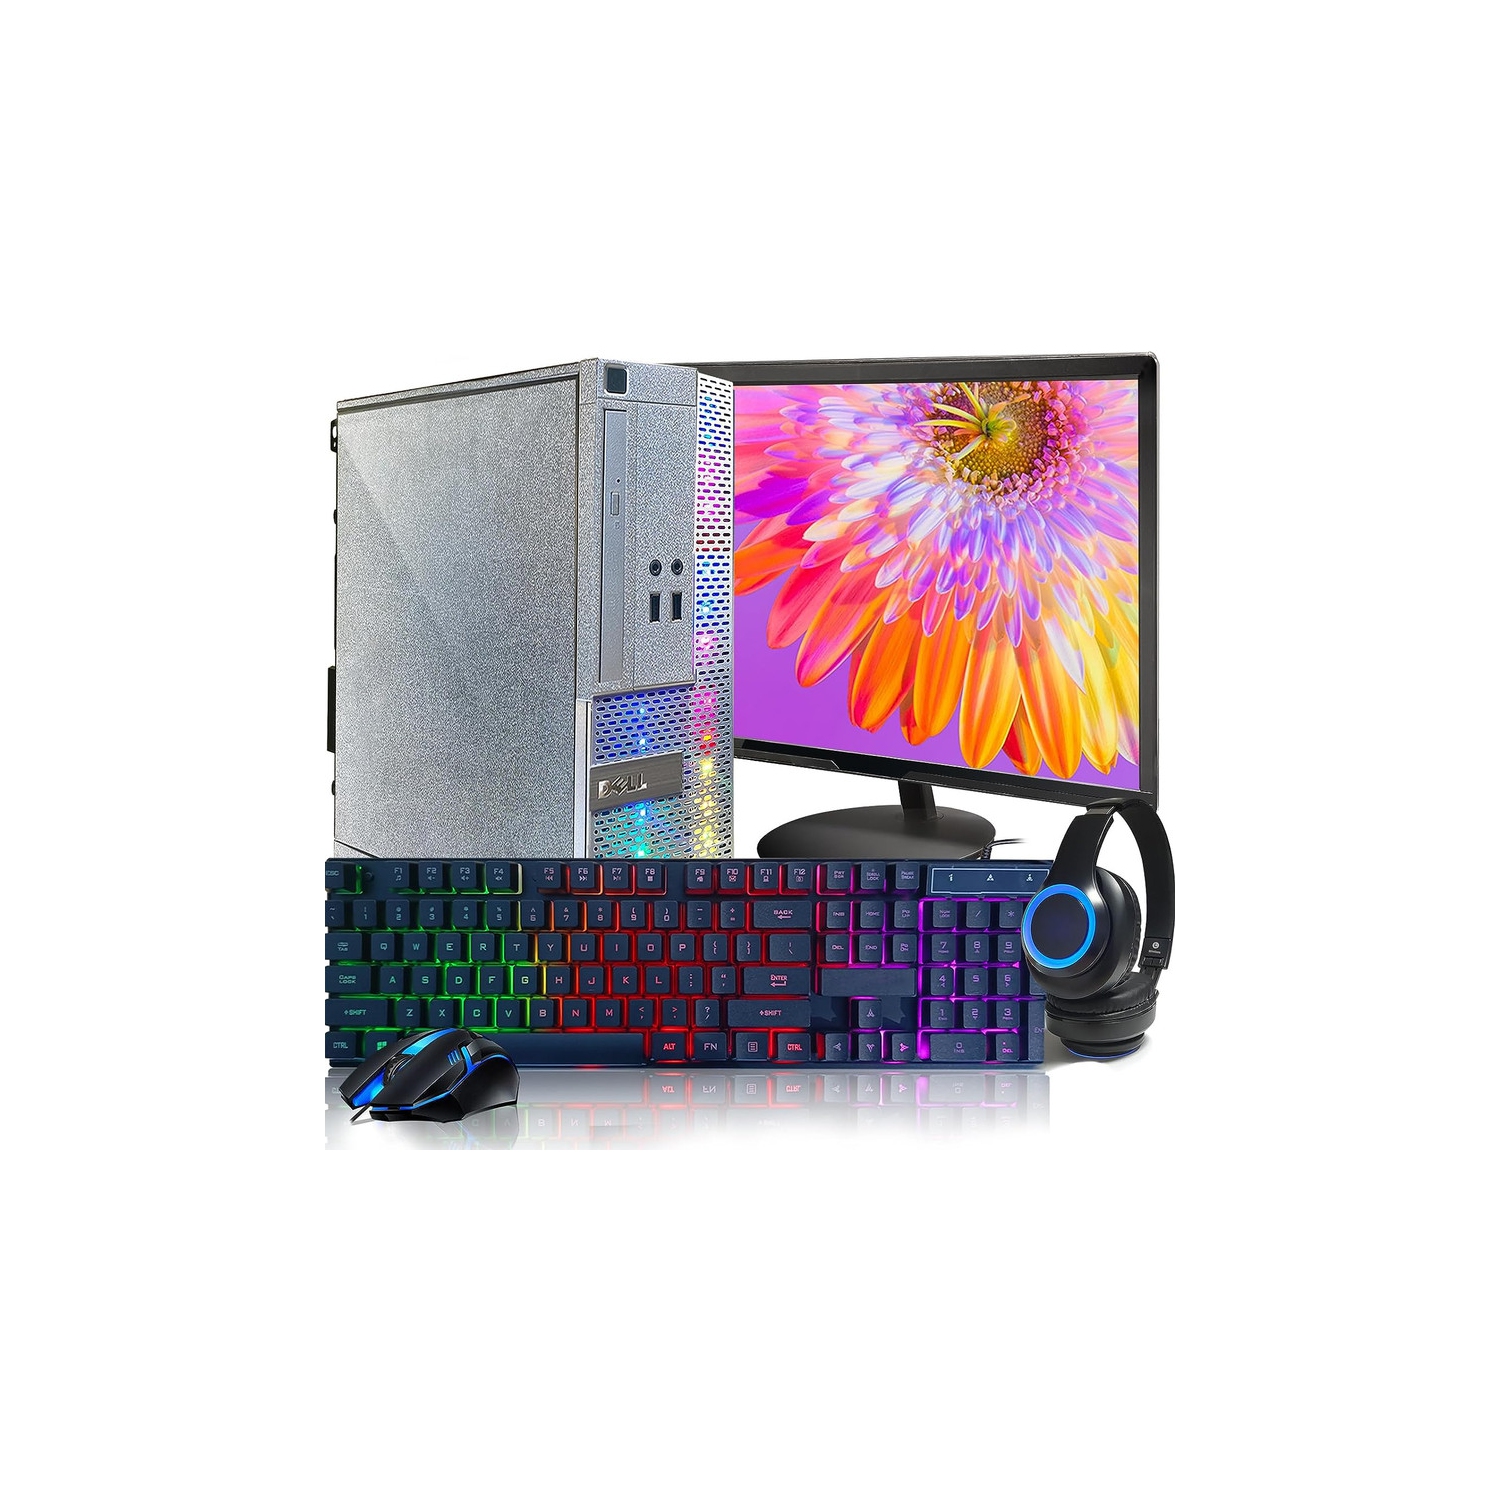 Dell RGB Gaming Desktop PC, Intel Quad Core I7 up to 3.8G, GTX 750 Ti 4G, 16G, 1T SSD, WiFi, BT, RGB Keyboard & Mouse, New 22" 1080 FHD LED, RGB Headphone, Win 10 Pro -Refurbished